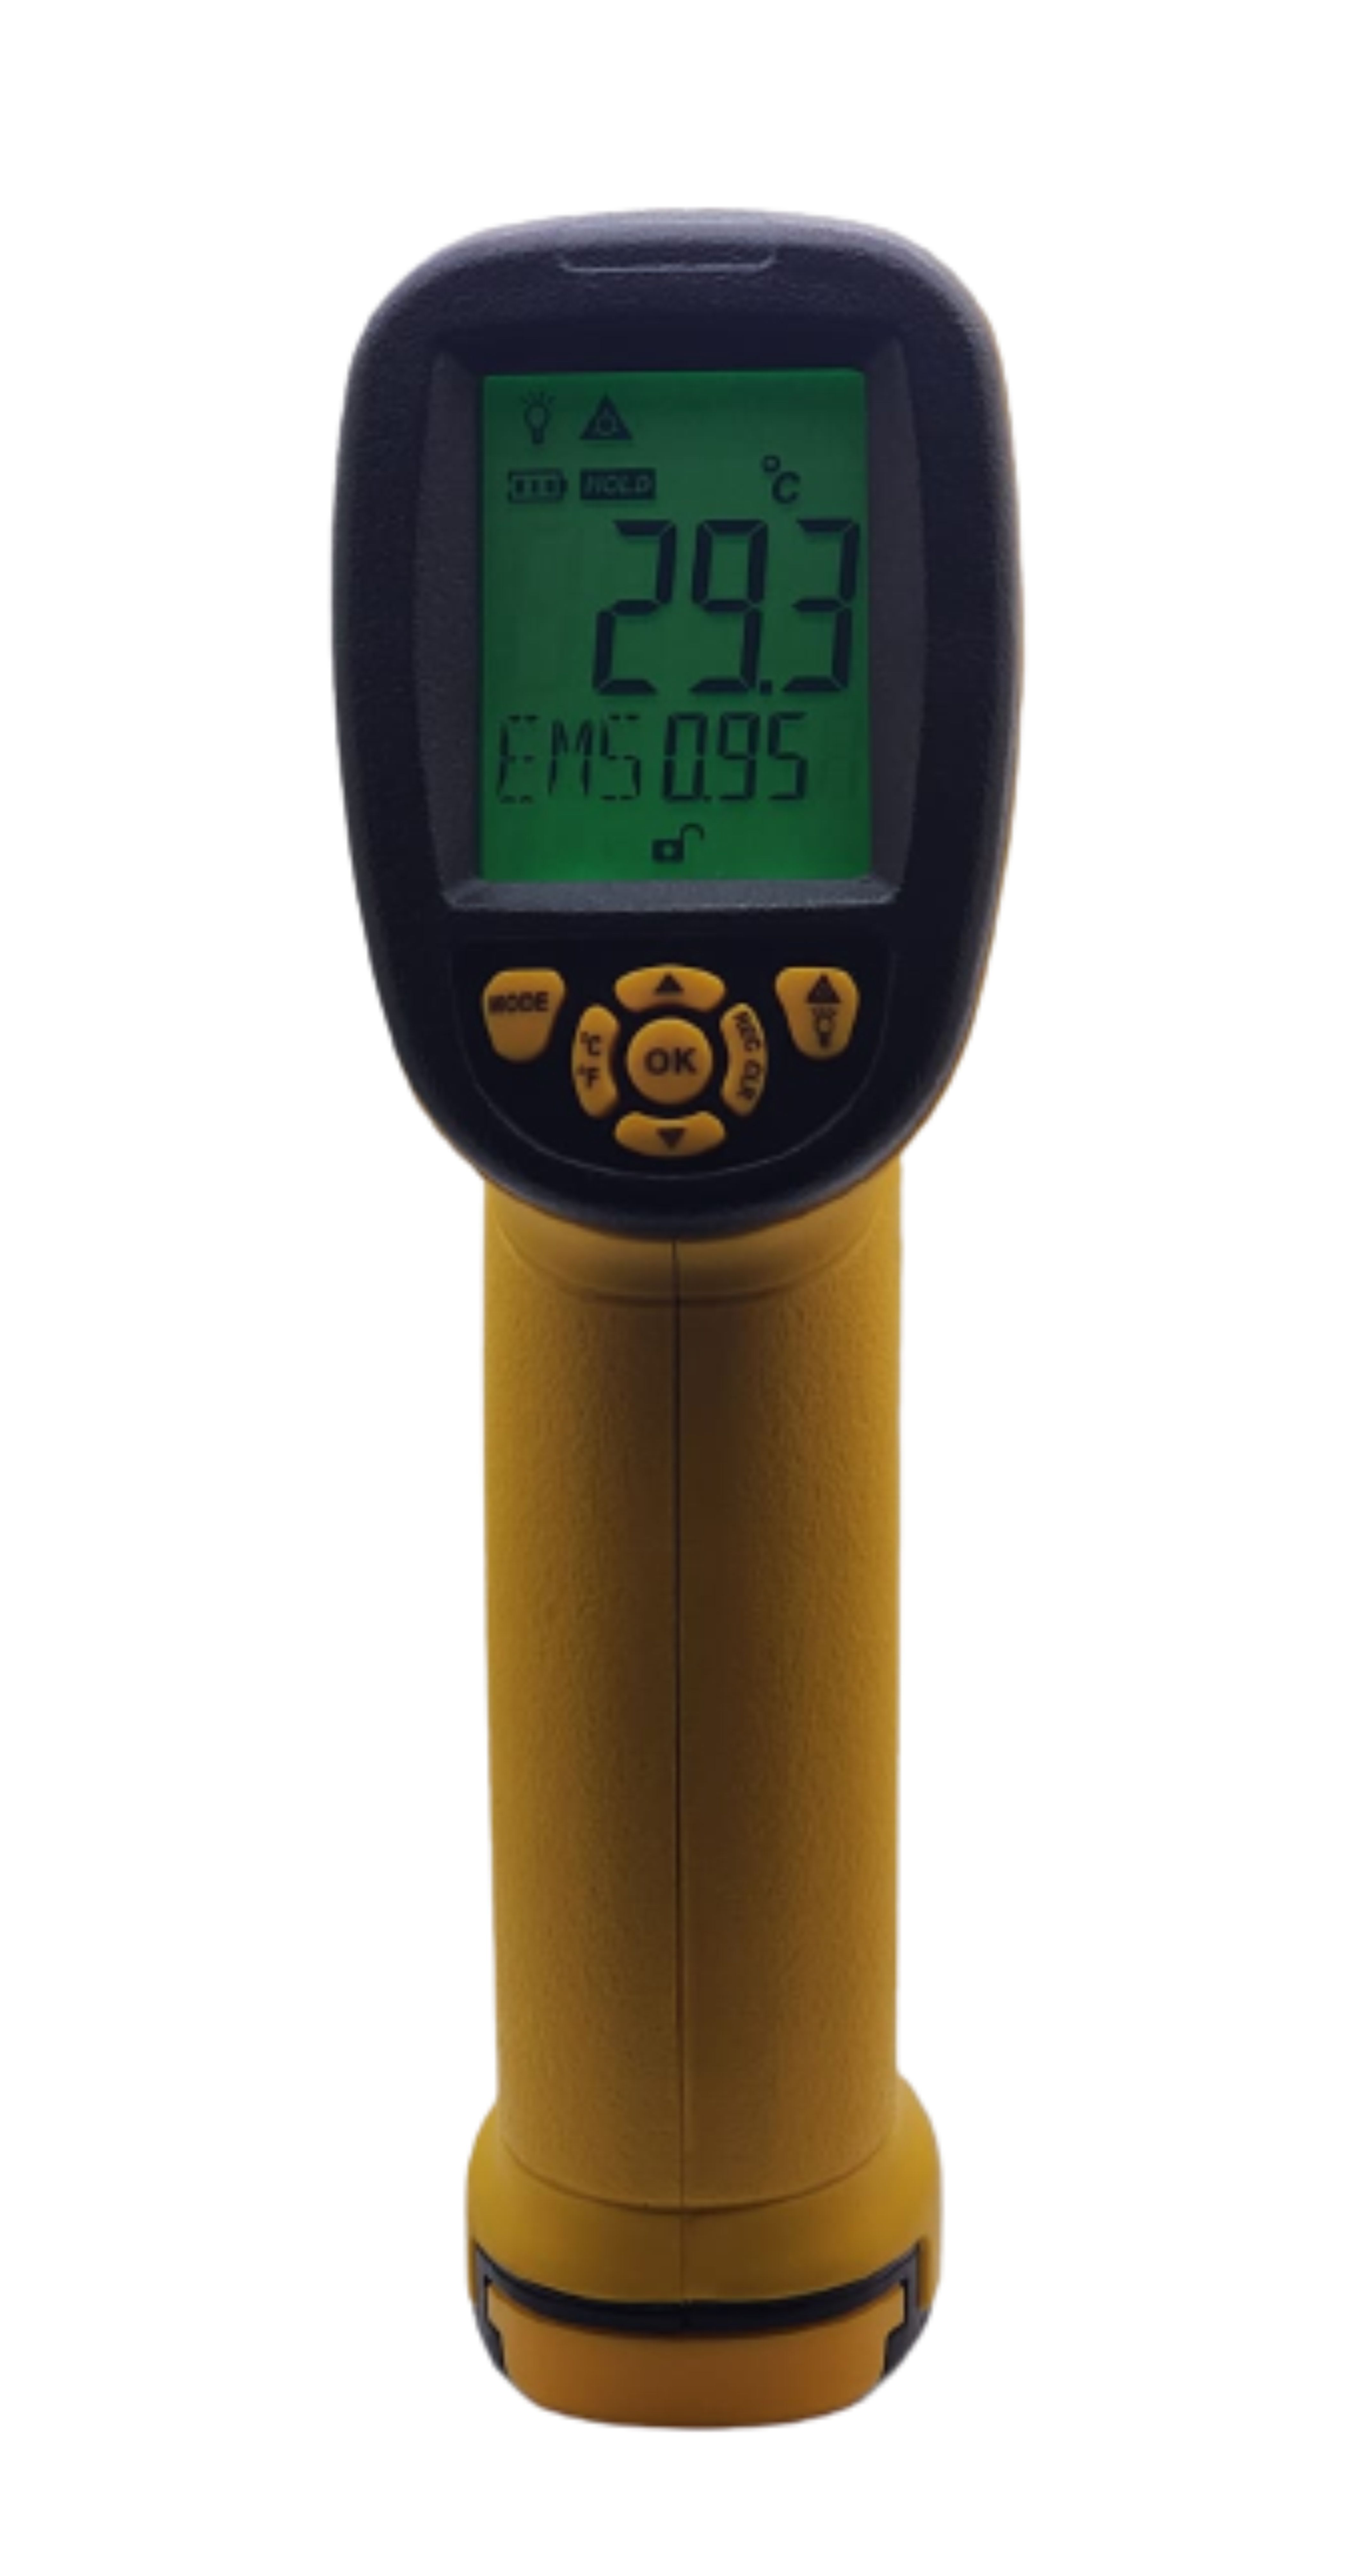 Smart Sensor make Infrared Thermometer